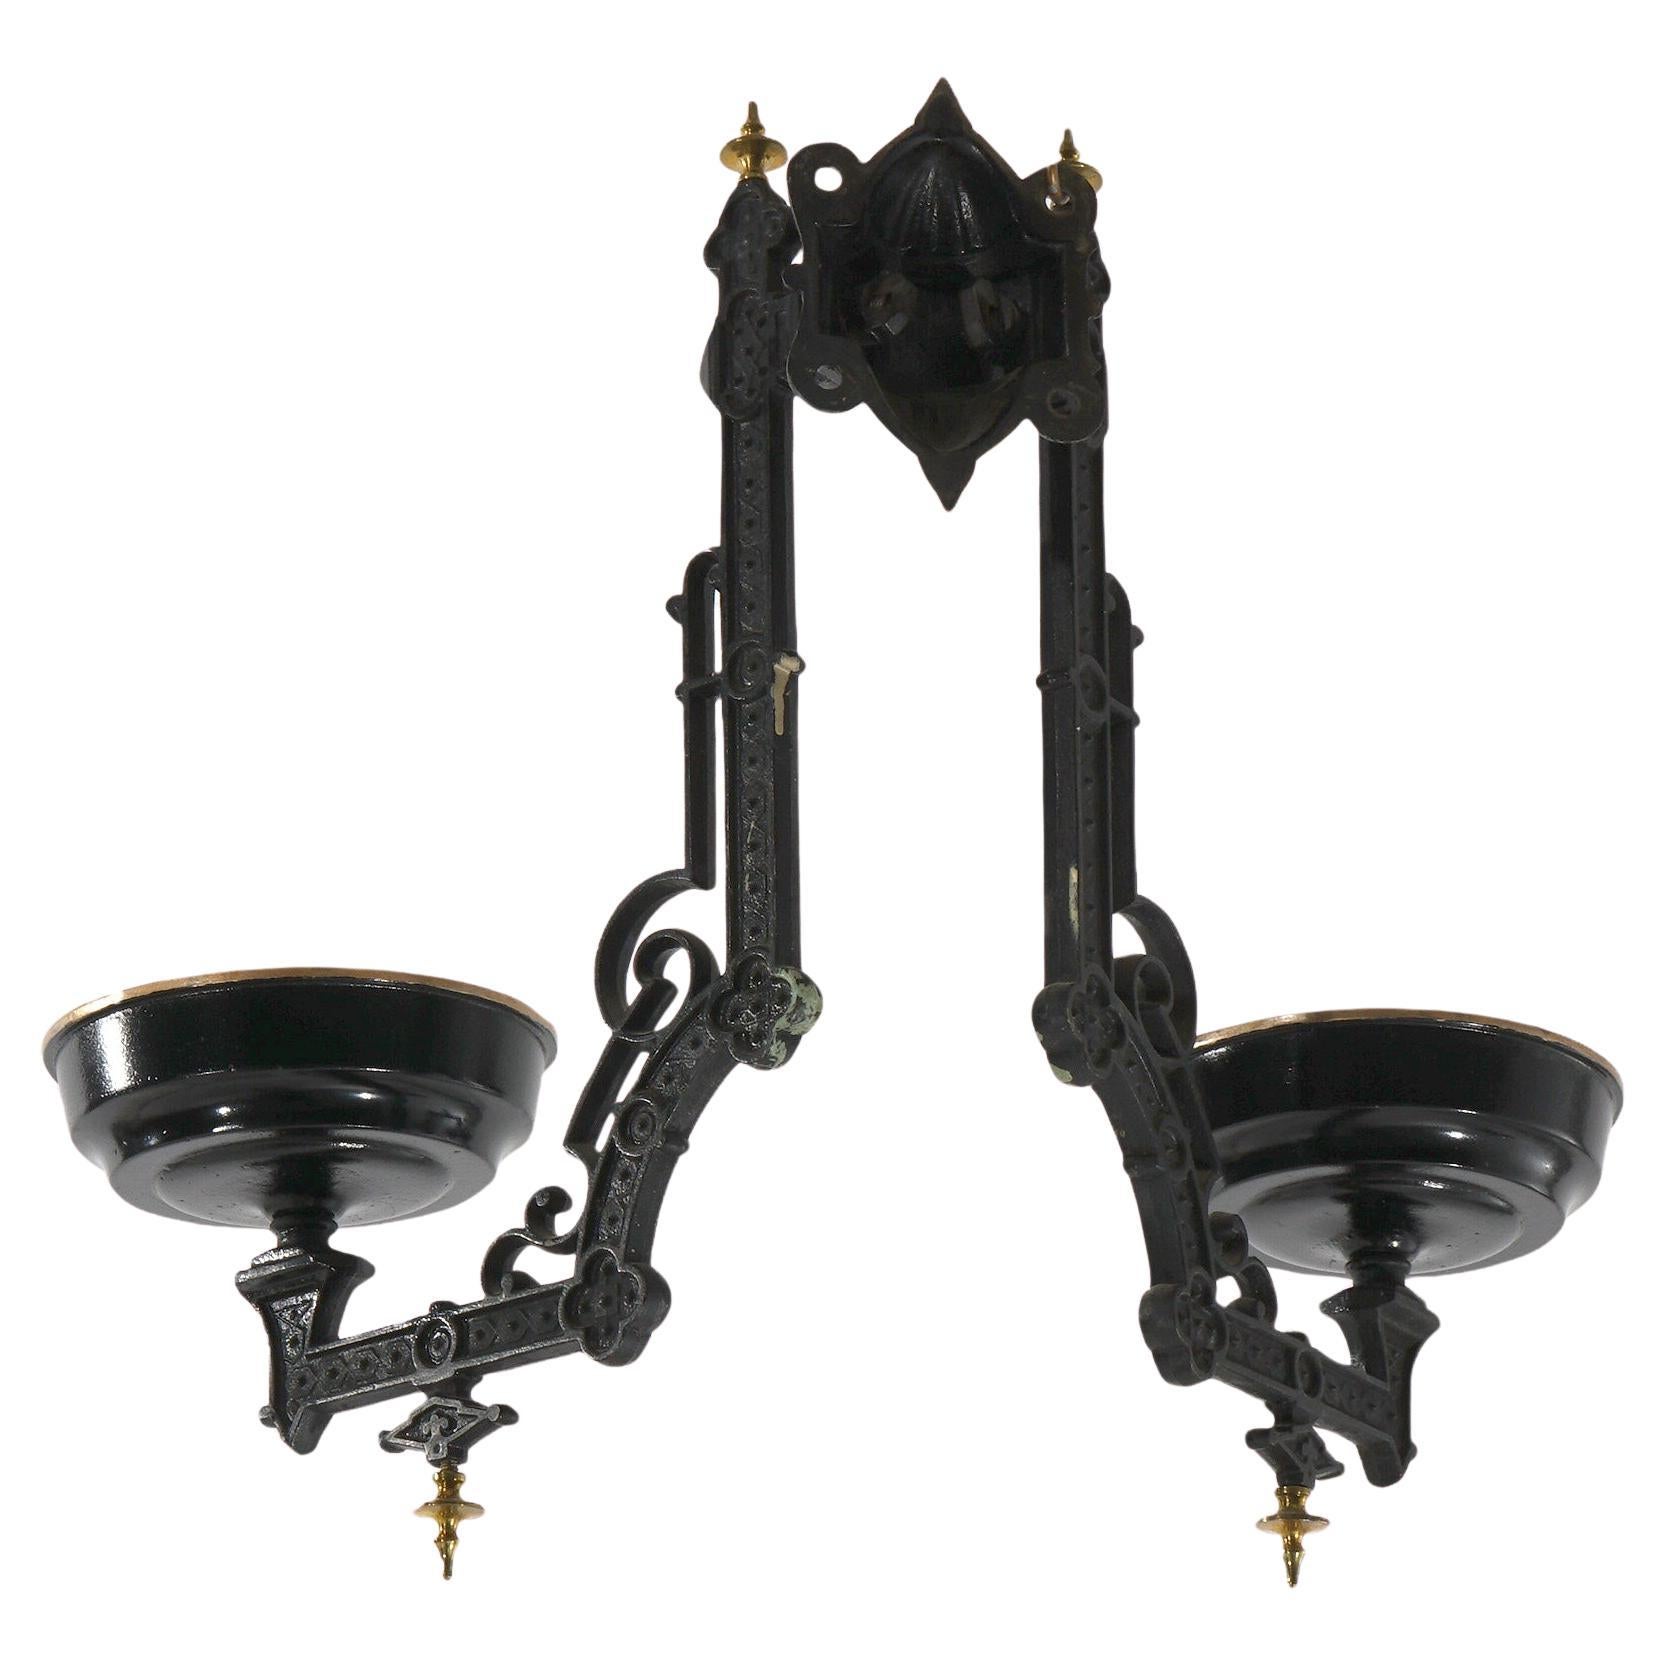 Antique Iron Horse Ebonized &Gilt Cast Iron Double Oil Lamp Wall Sconce C1860